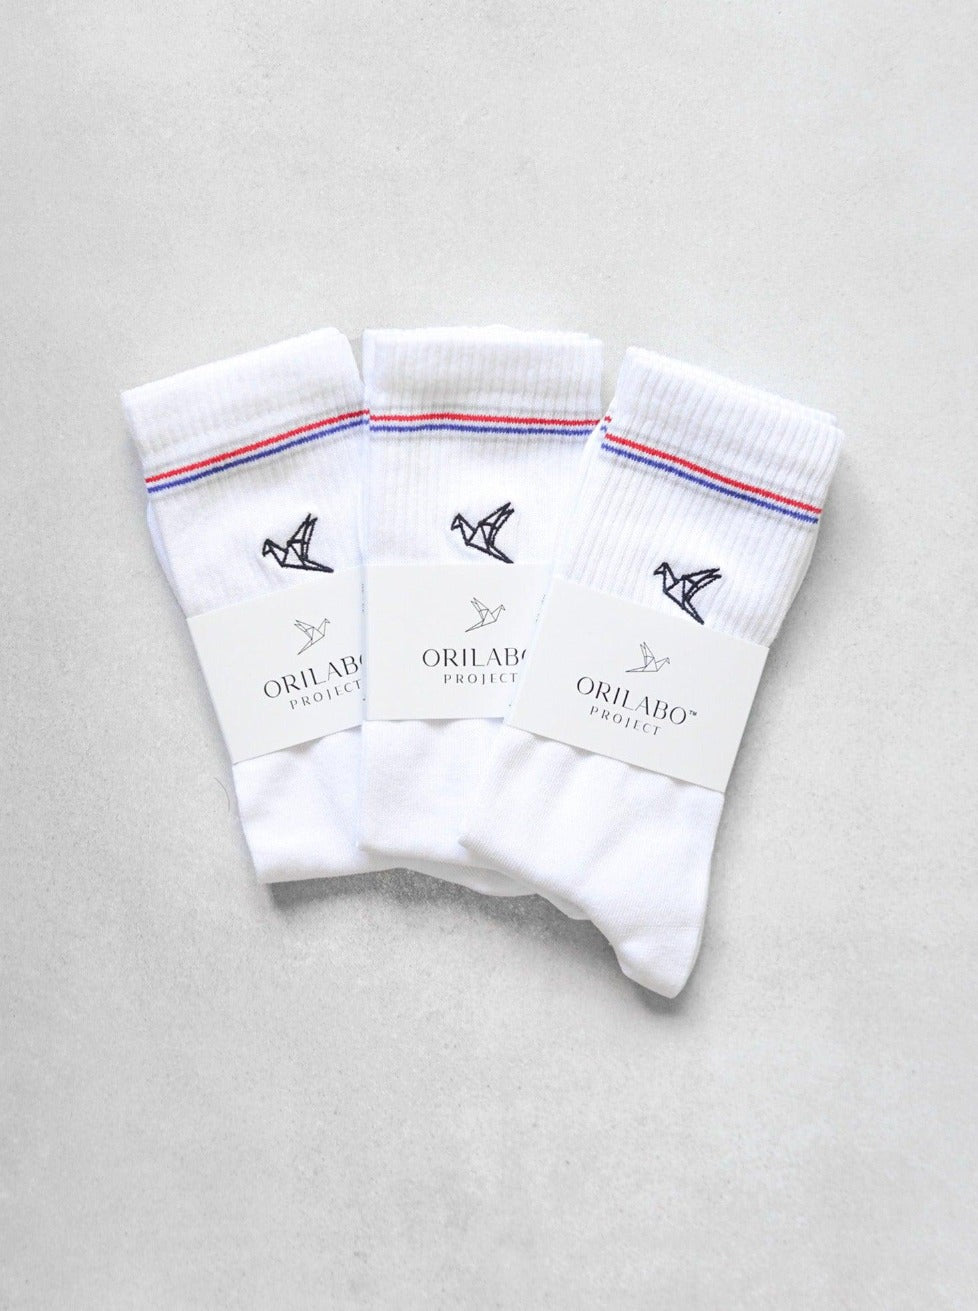 ORILABO Organic Cotton Socks - White - 3 Pairs - ORILABO Project